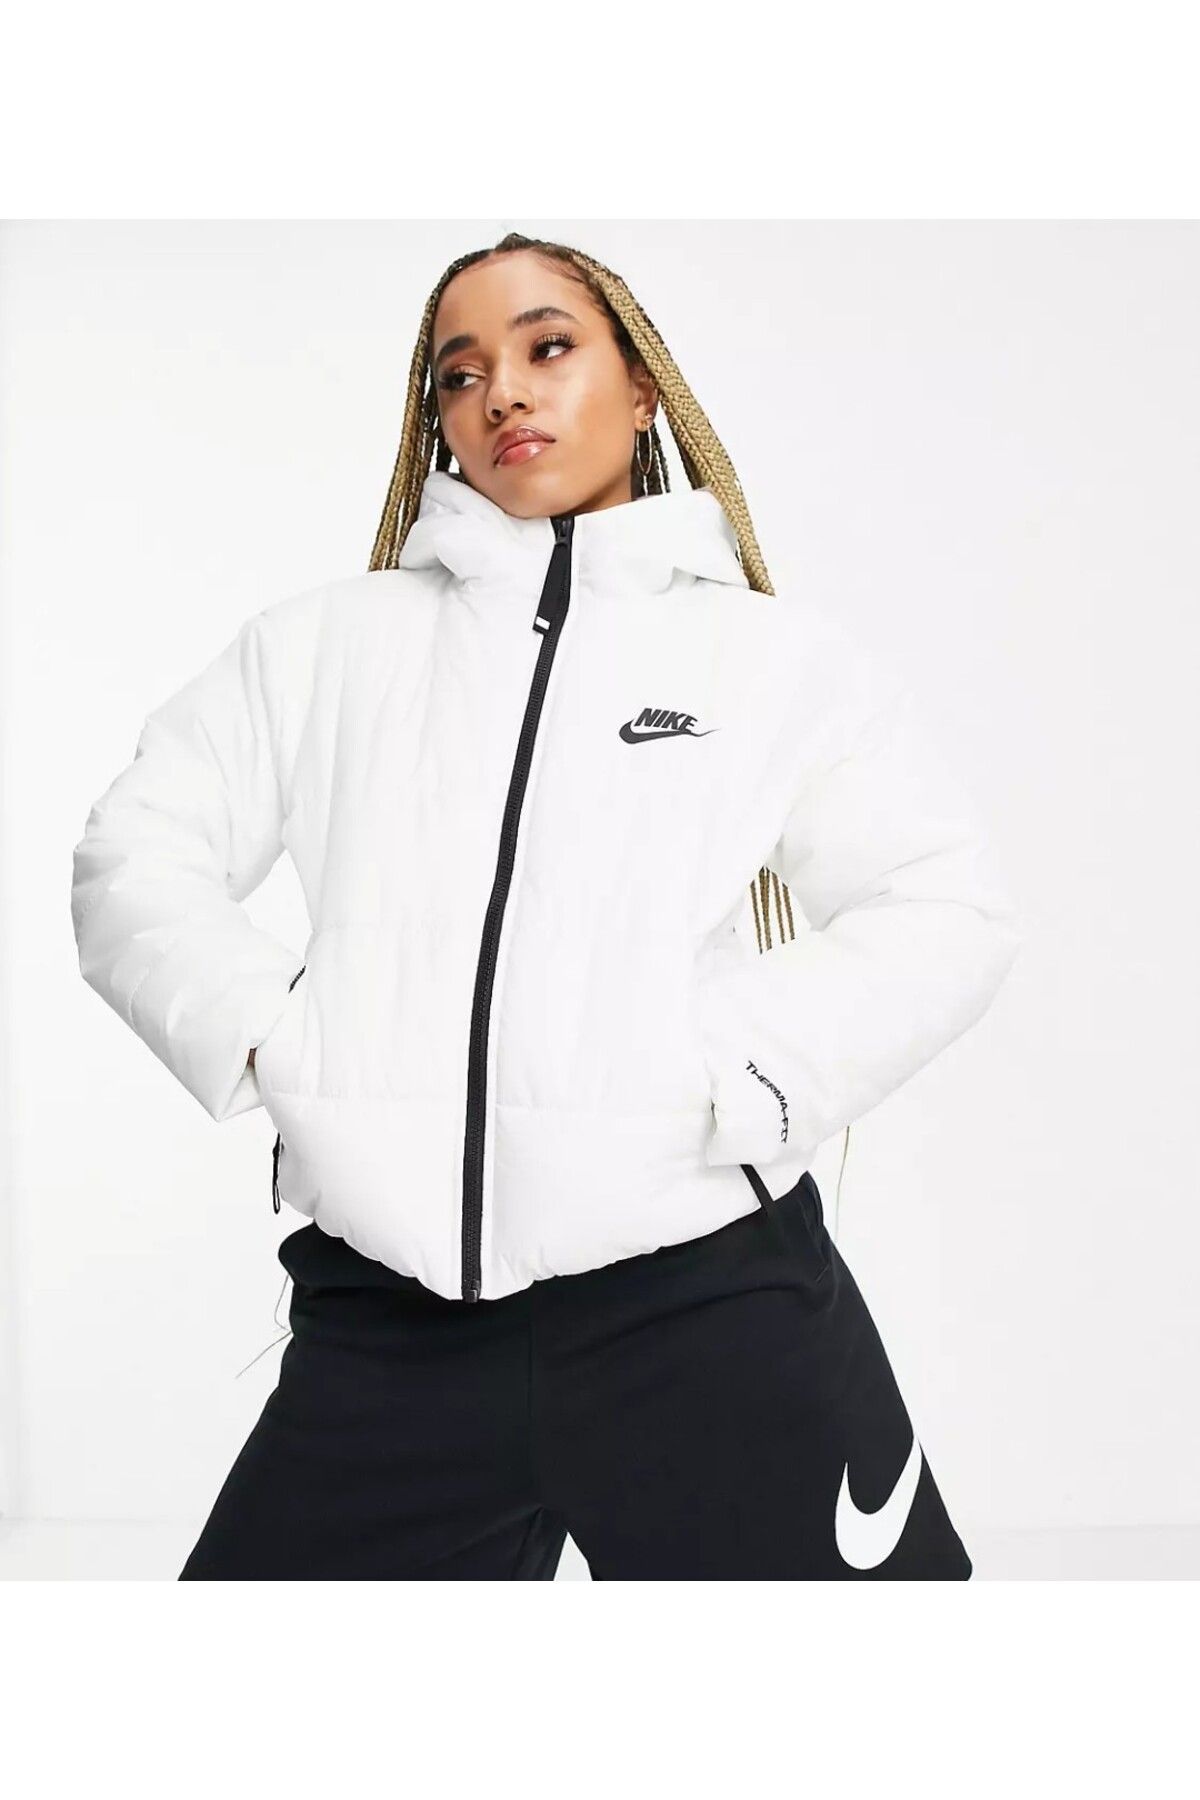 Nike Sports Winterjacket - White - Fitted - Trendyol